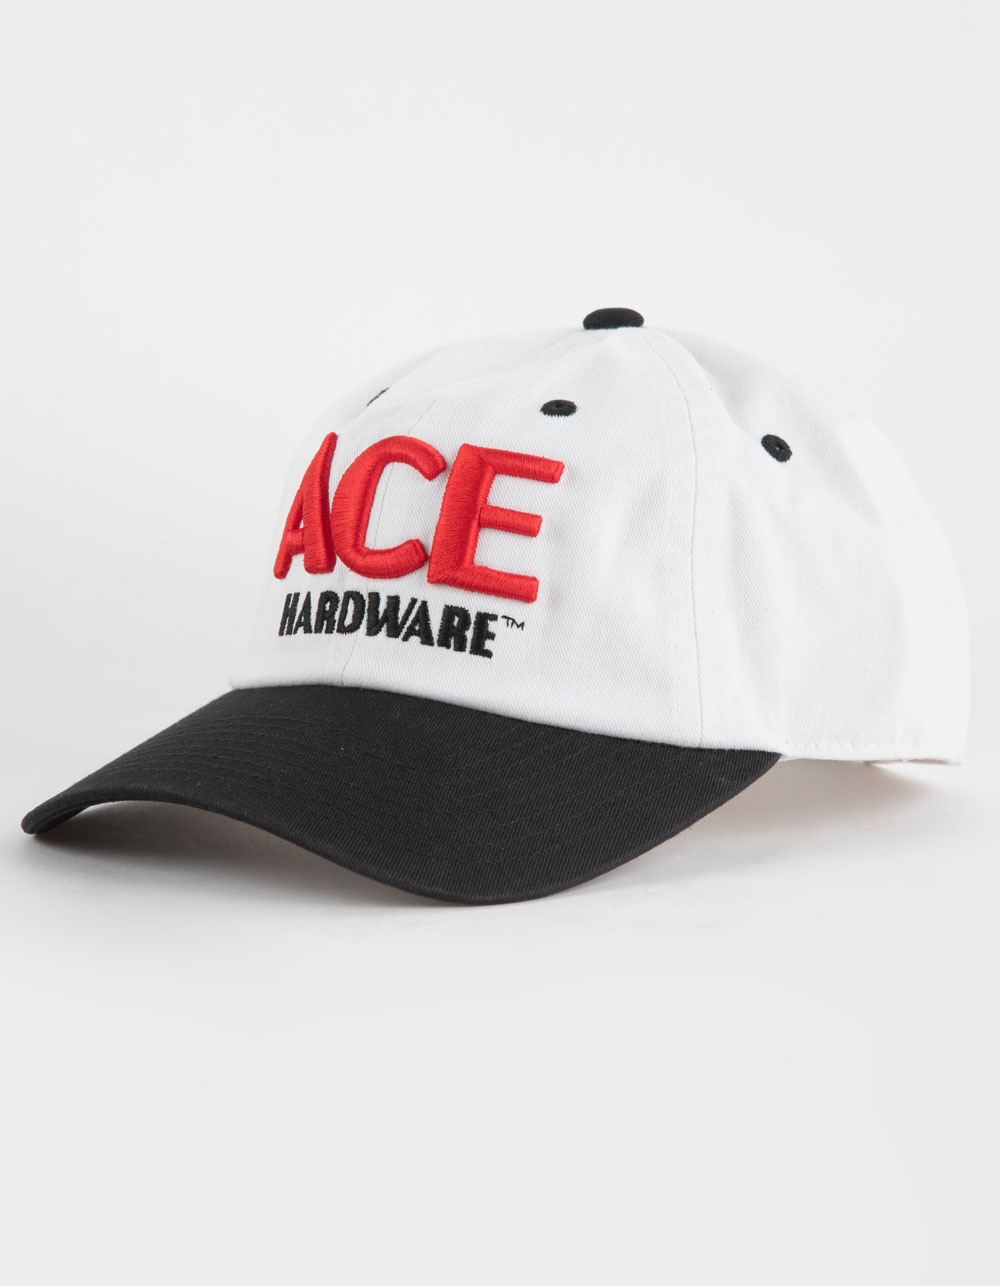 AMERICAN NEEDLE Ace Hardware Ballpark Strapback Hat